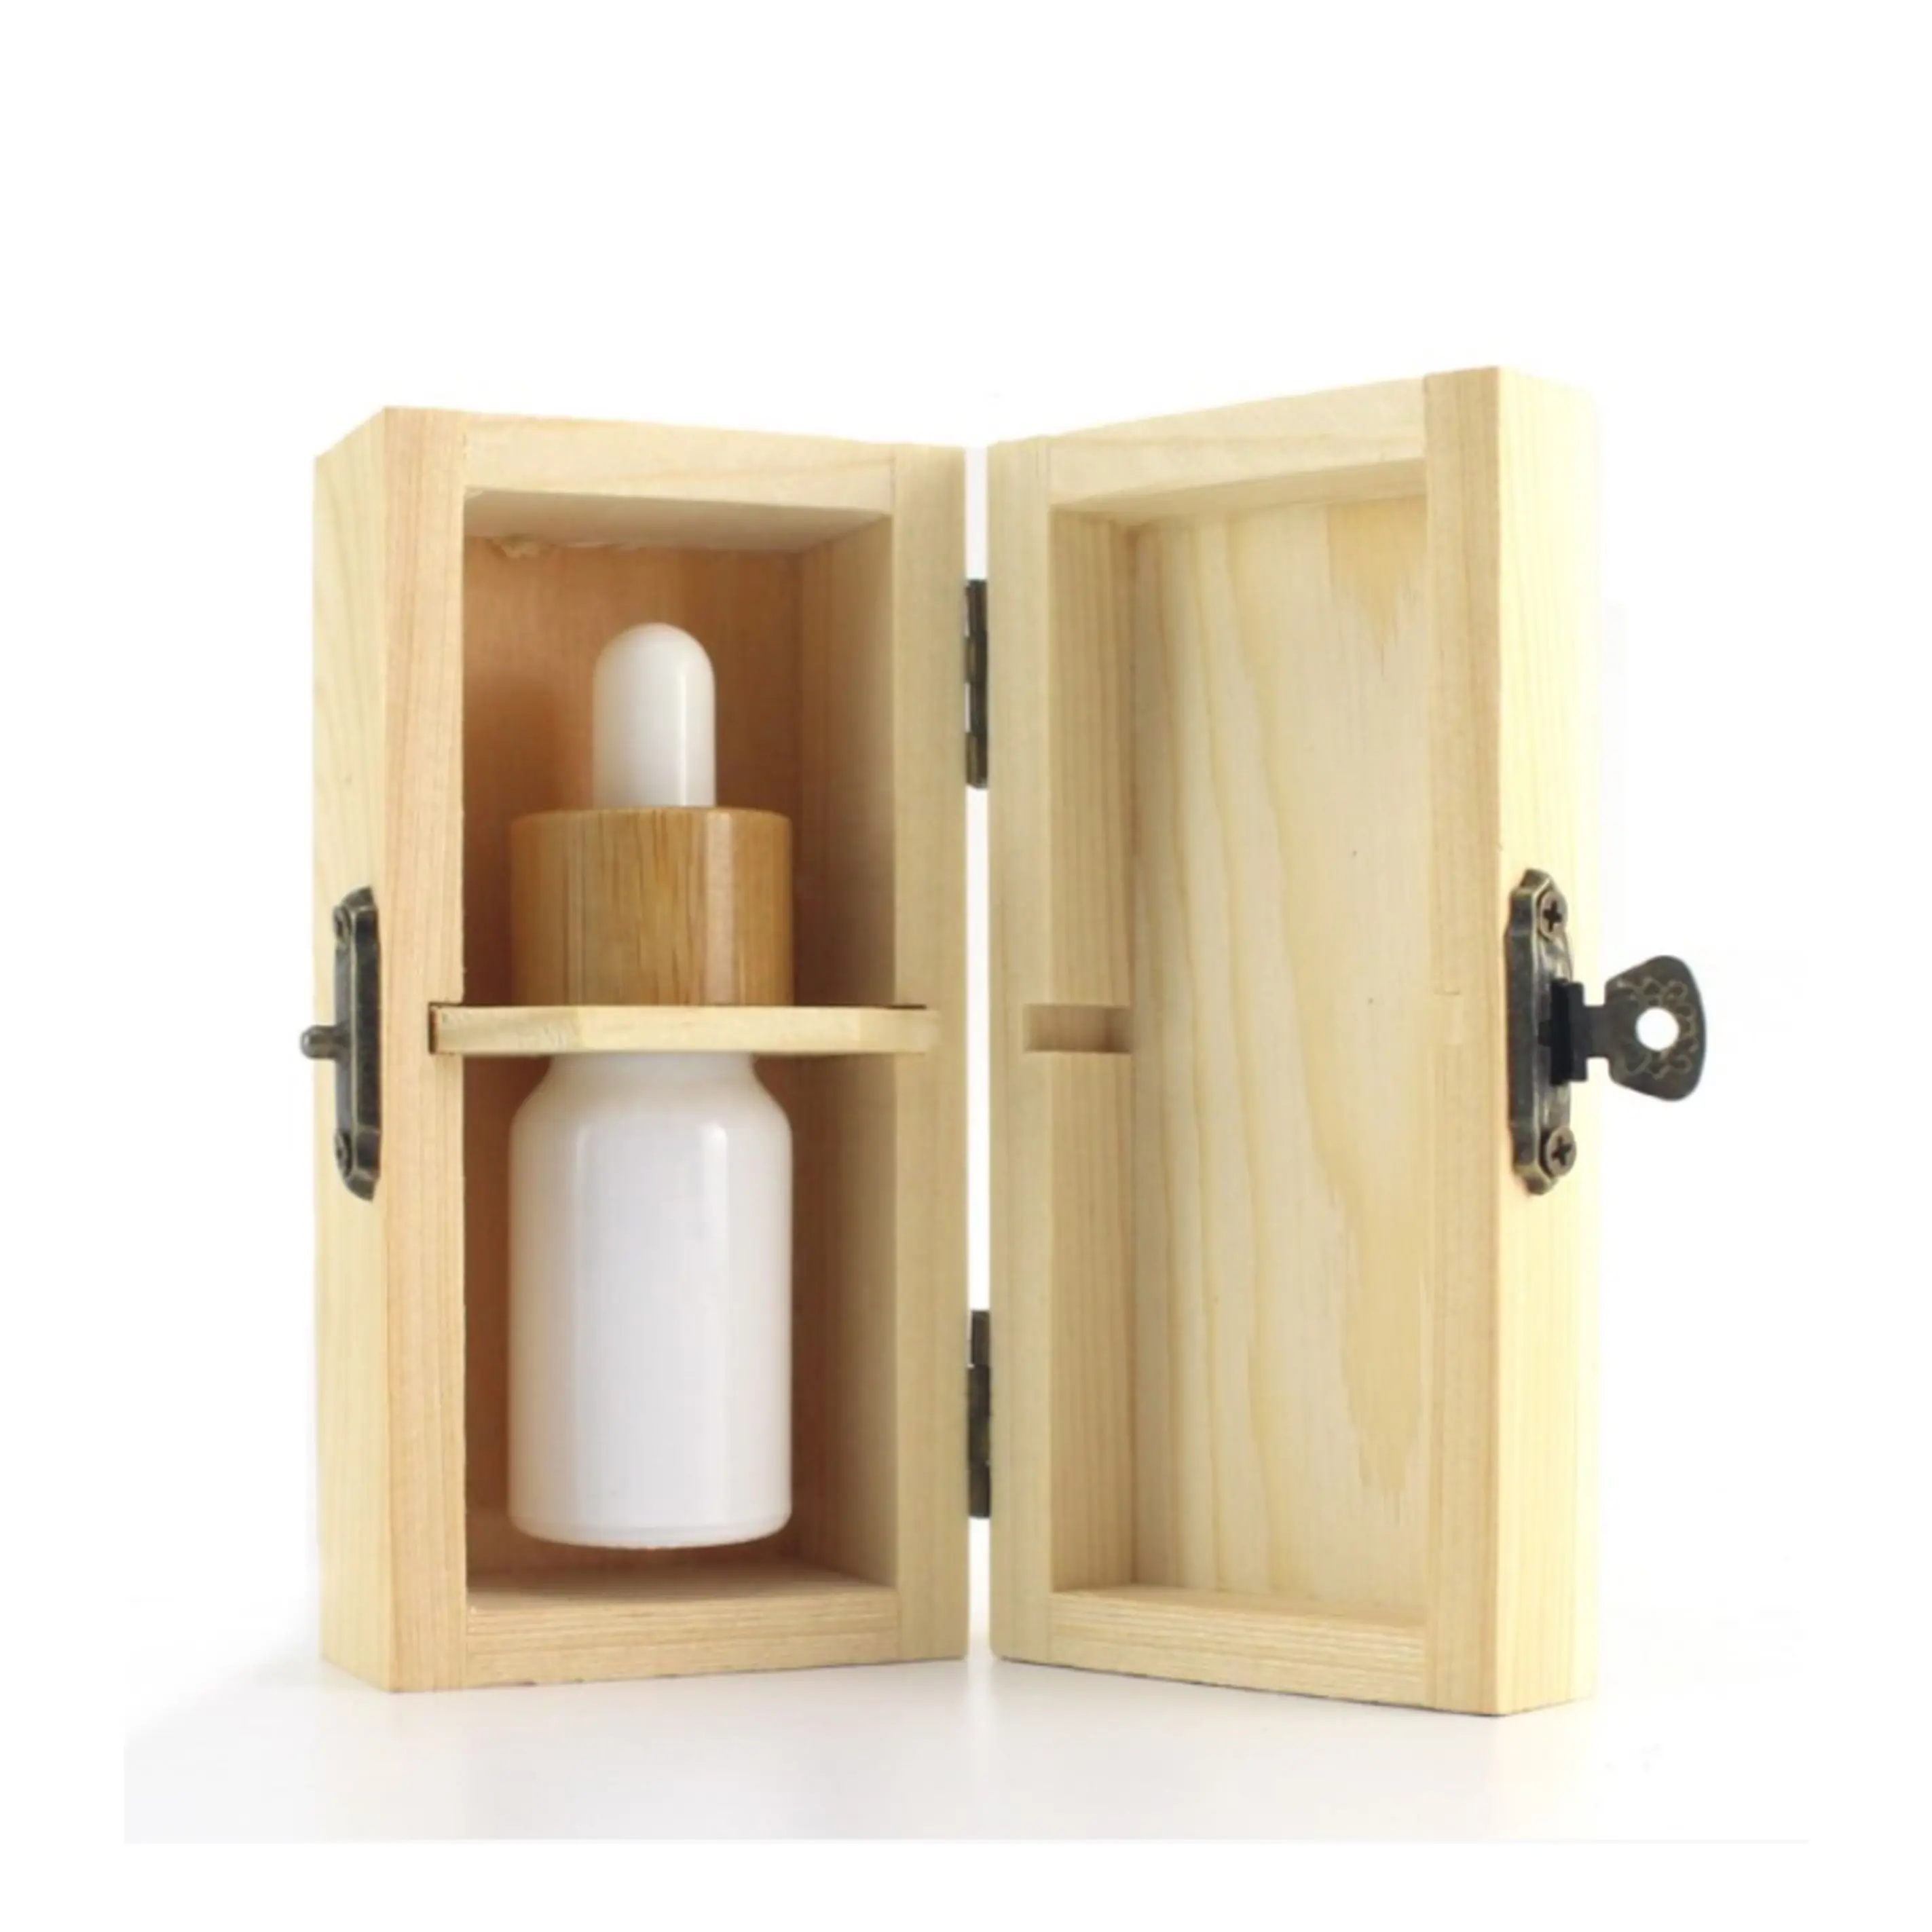 Caja de bambú de madera personalizada hecha a mano, con tapa magnética para aceite esencial, caja de embalaje de madera para botellas